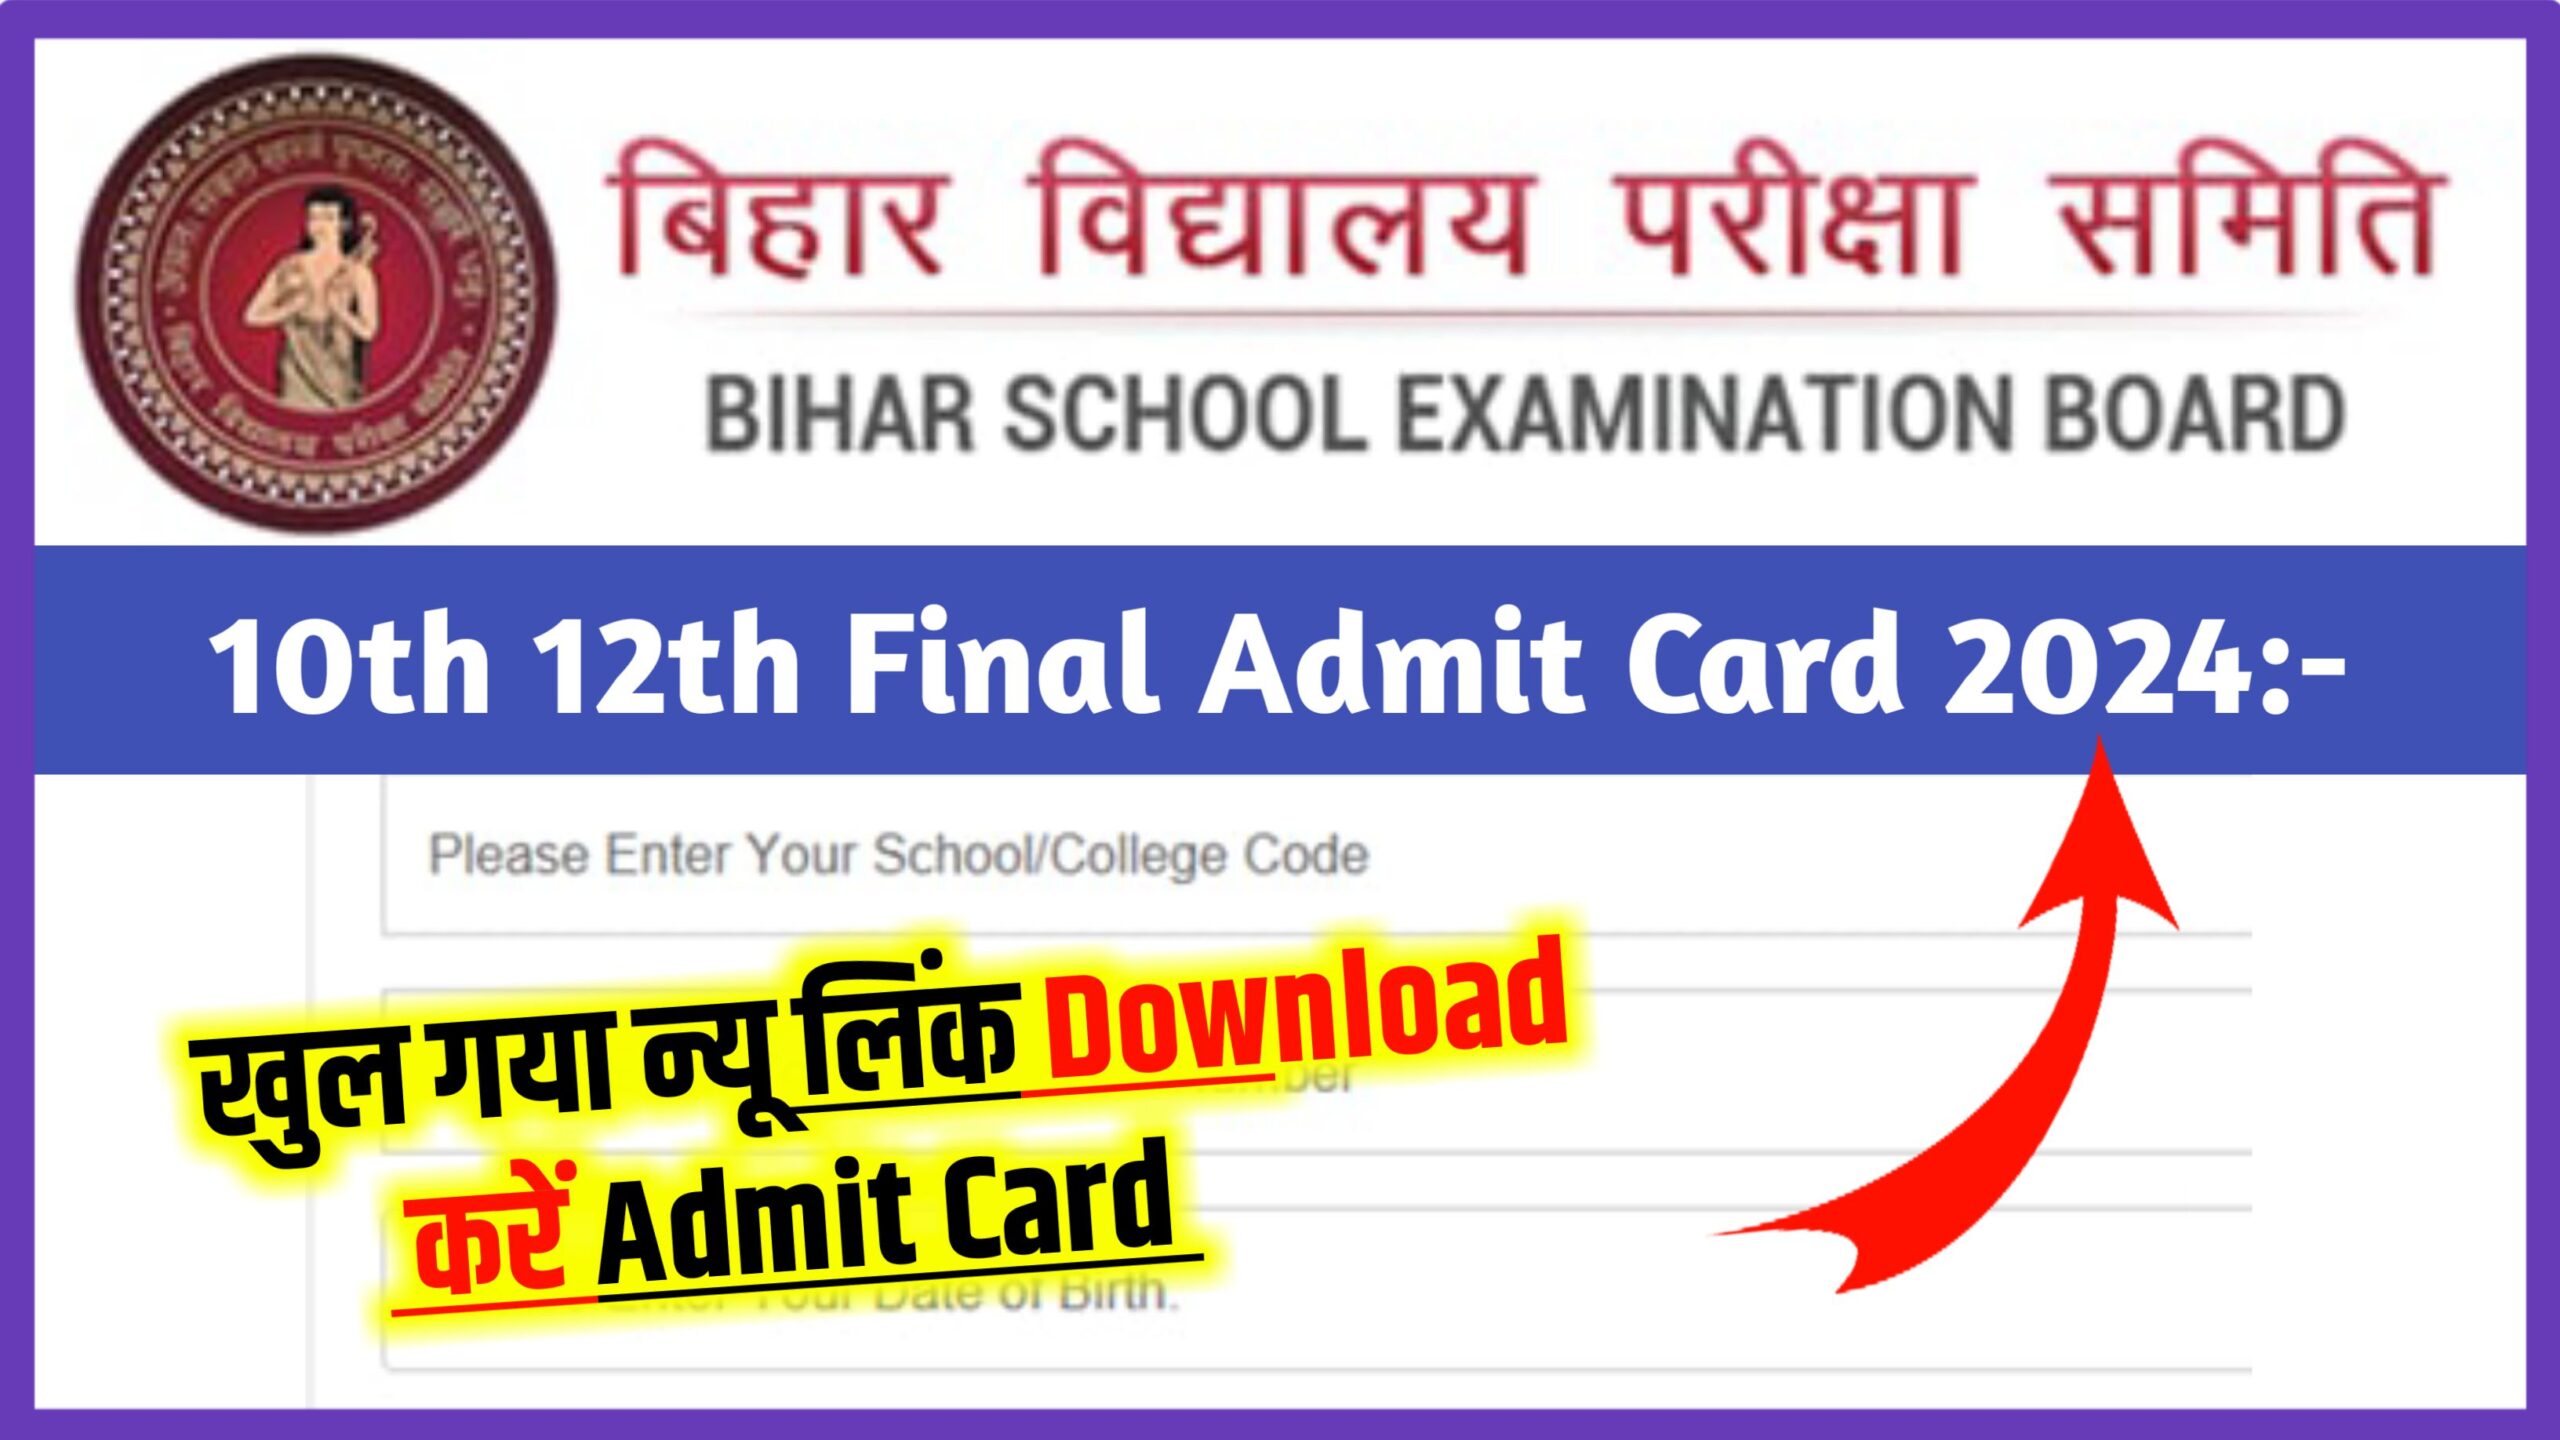 Bihar Board 10th 12th Final Admit Card Download Link Open 2024: